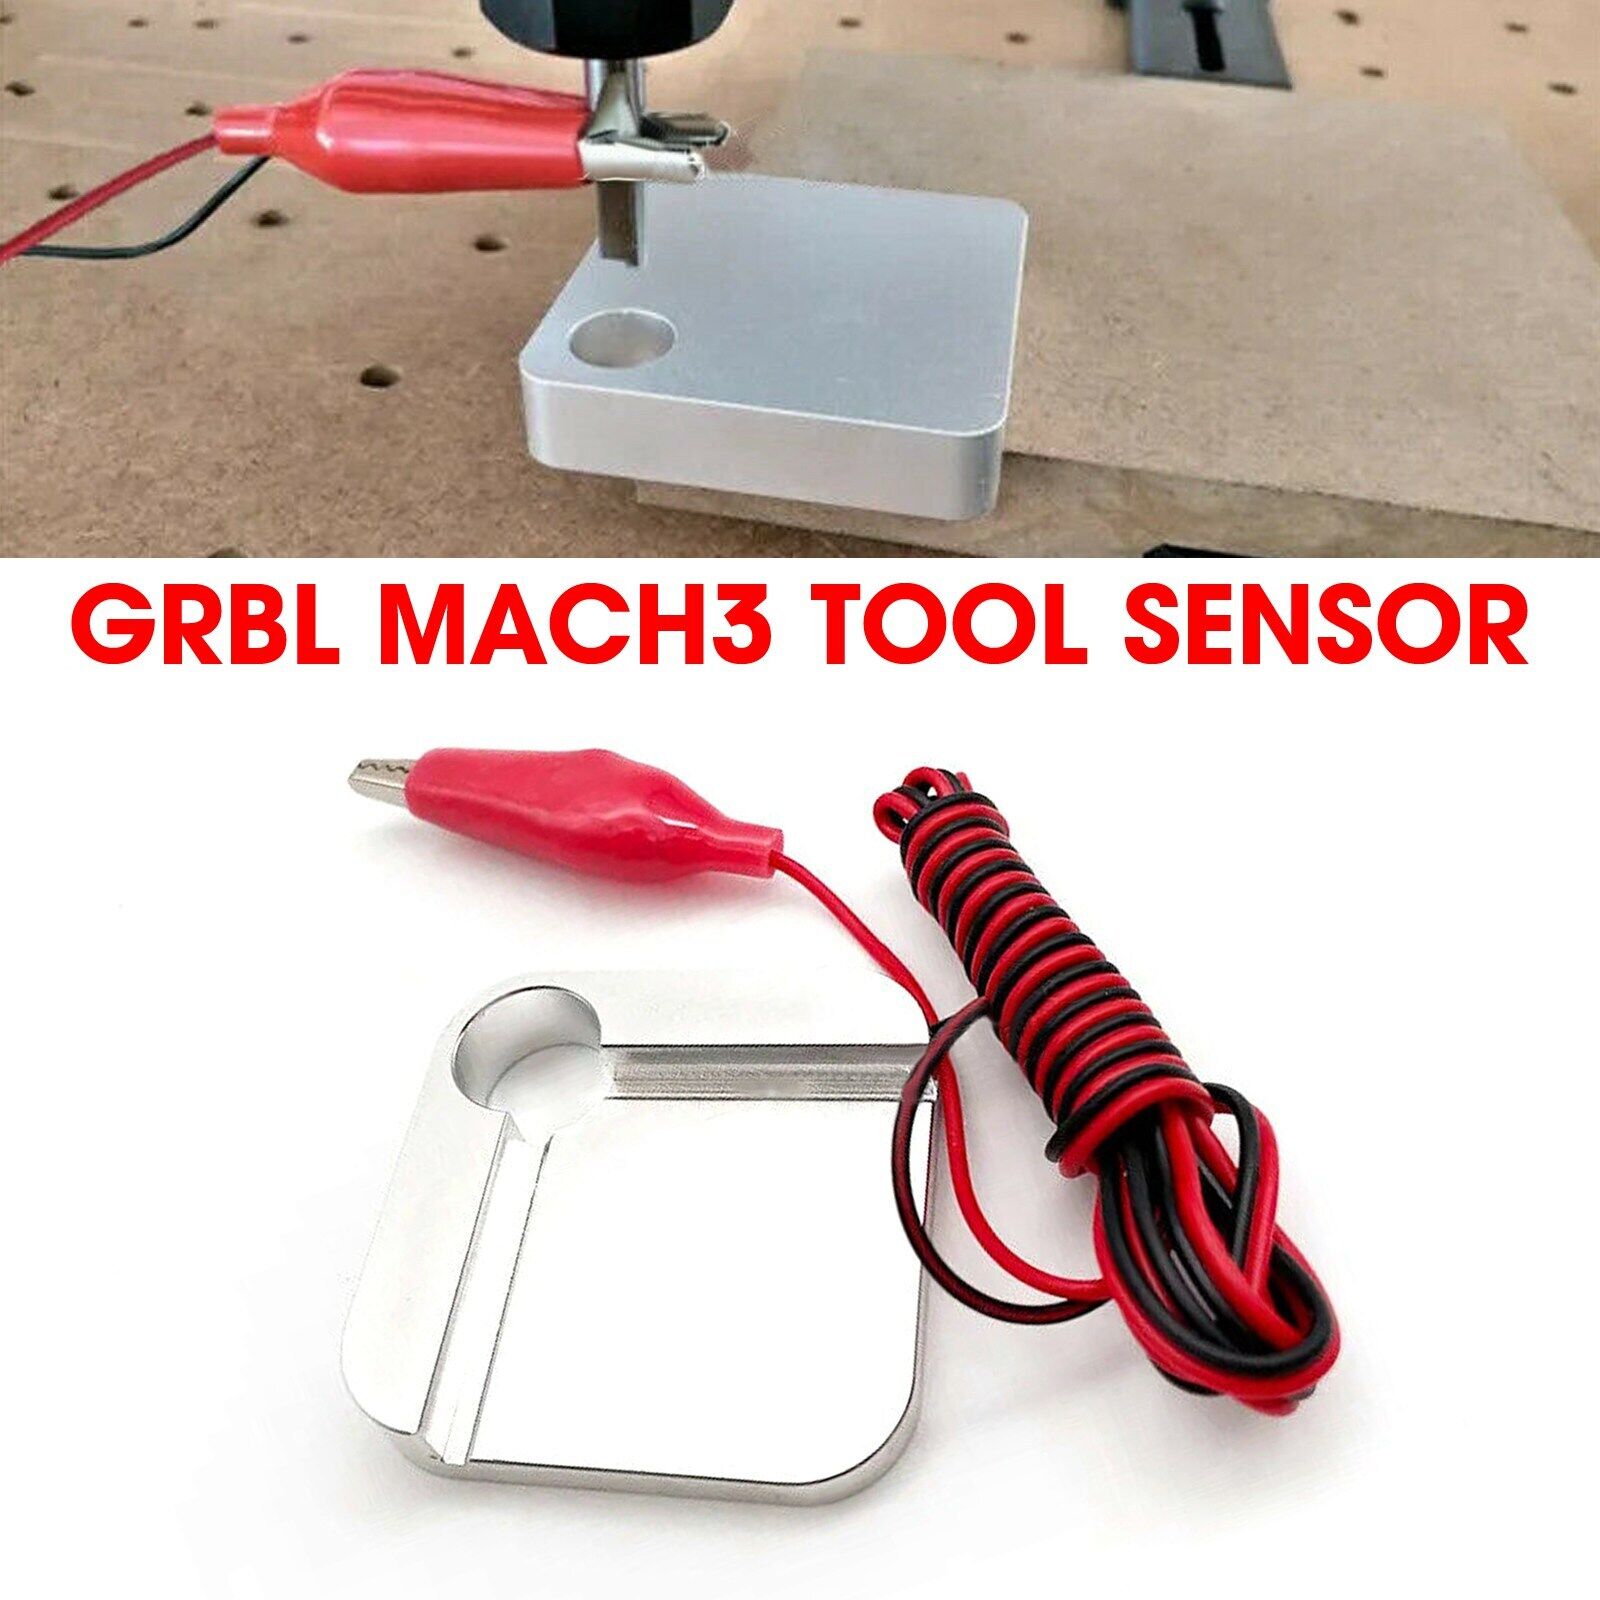 XYZ Touch Probe Precise Plug and Play GRBL Mach3 Tool Sensor for CNC Machine Kit